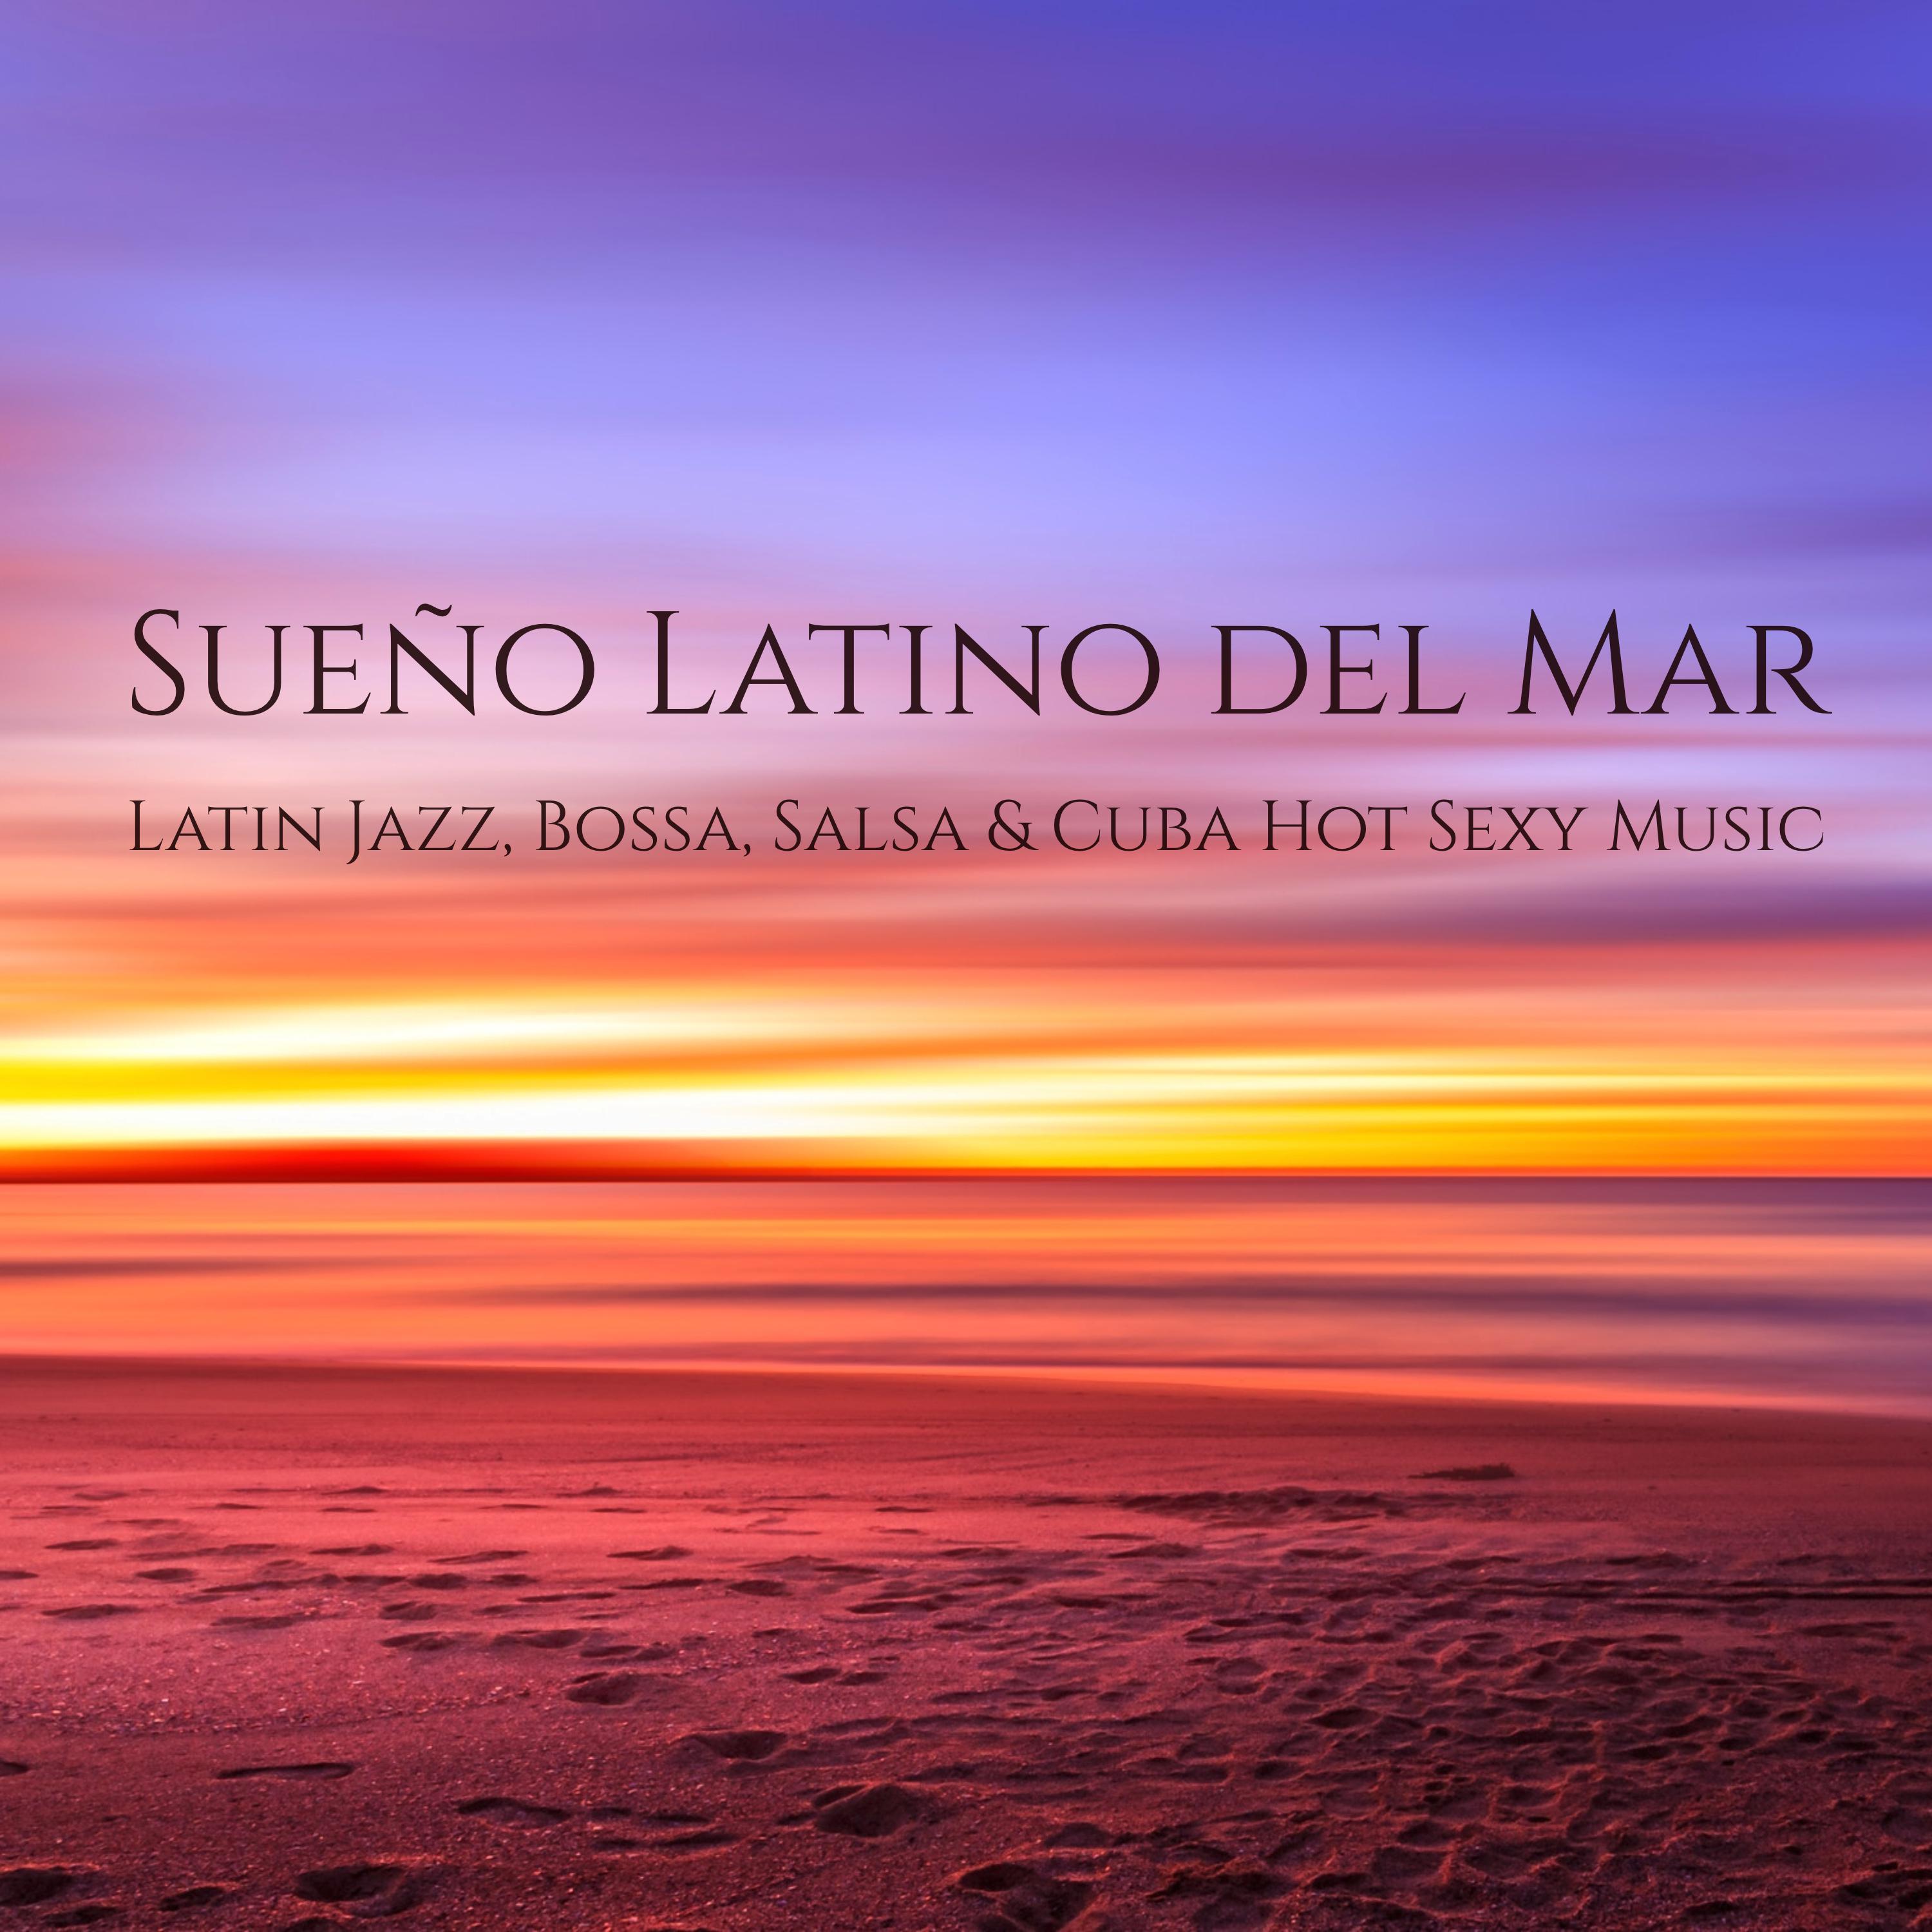 Sueño Latino del Mar – Latin Jazz, Bossa, Salsa & Cuba Hot **** Music